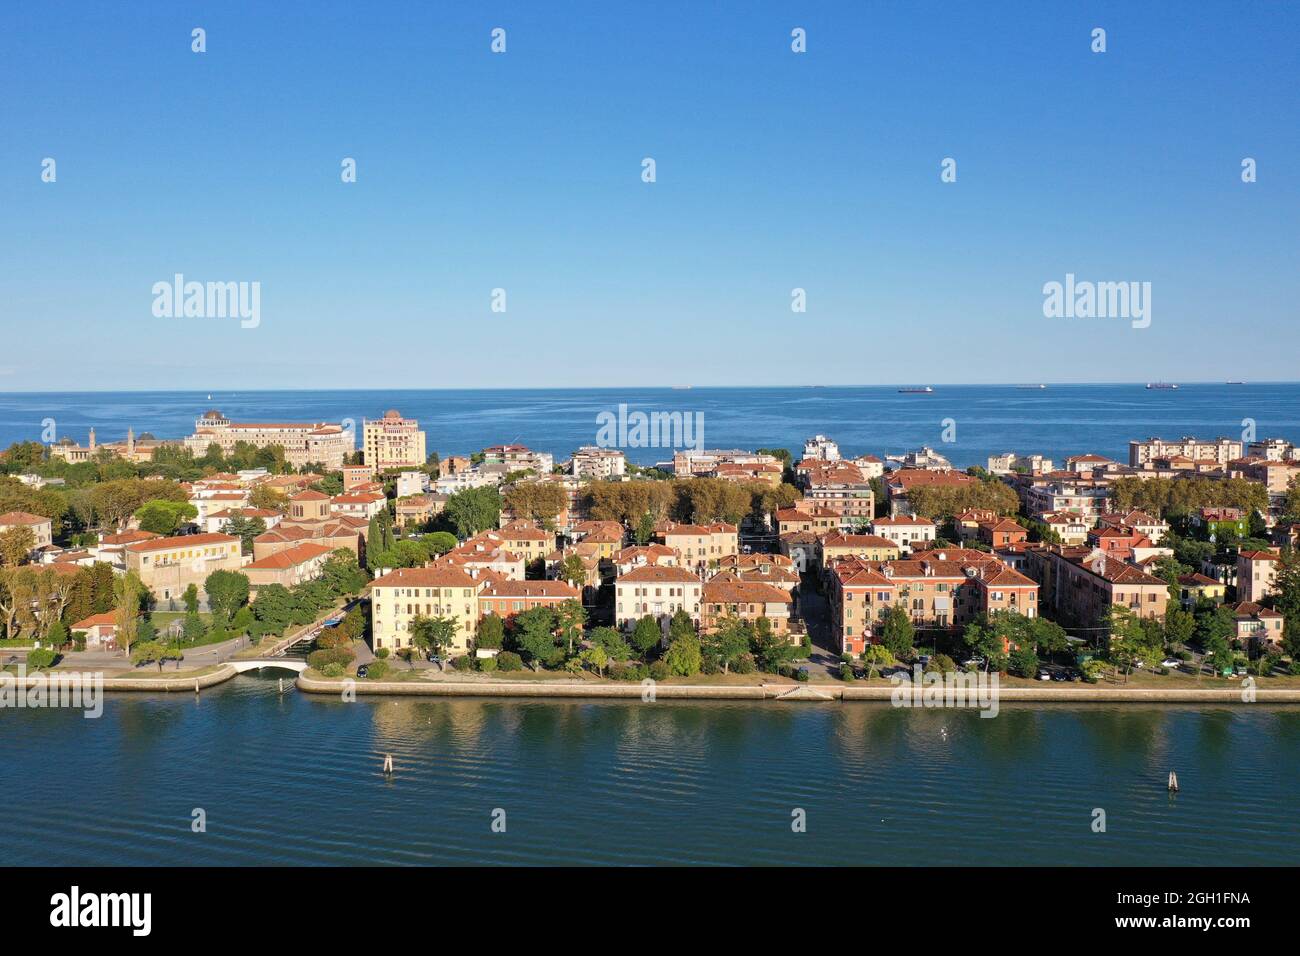 Aerial view of Venice Lido island, Venice Lagoon, Venice, Italy, Europe. Stock Photo